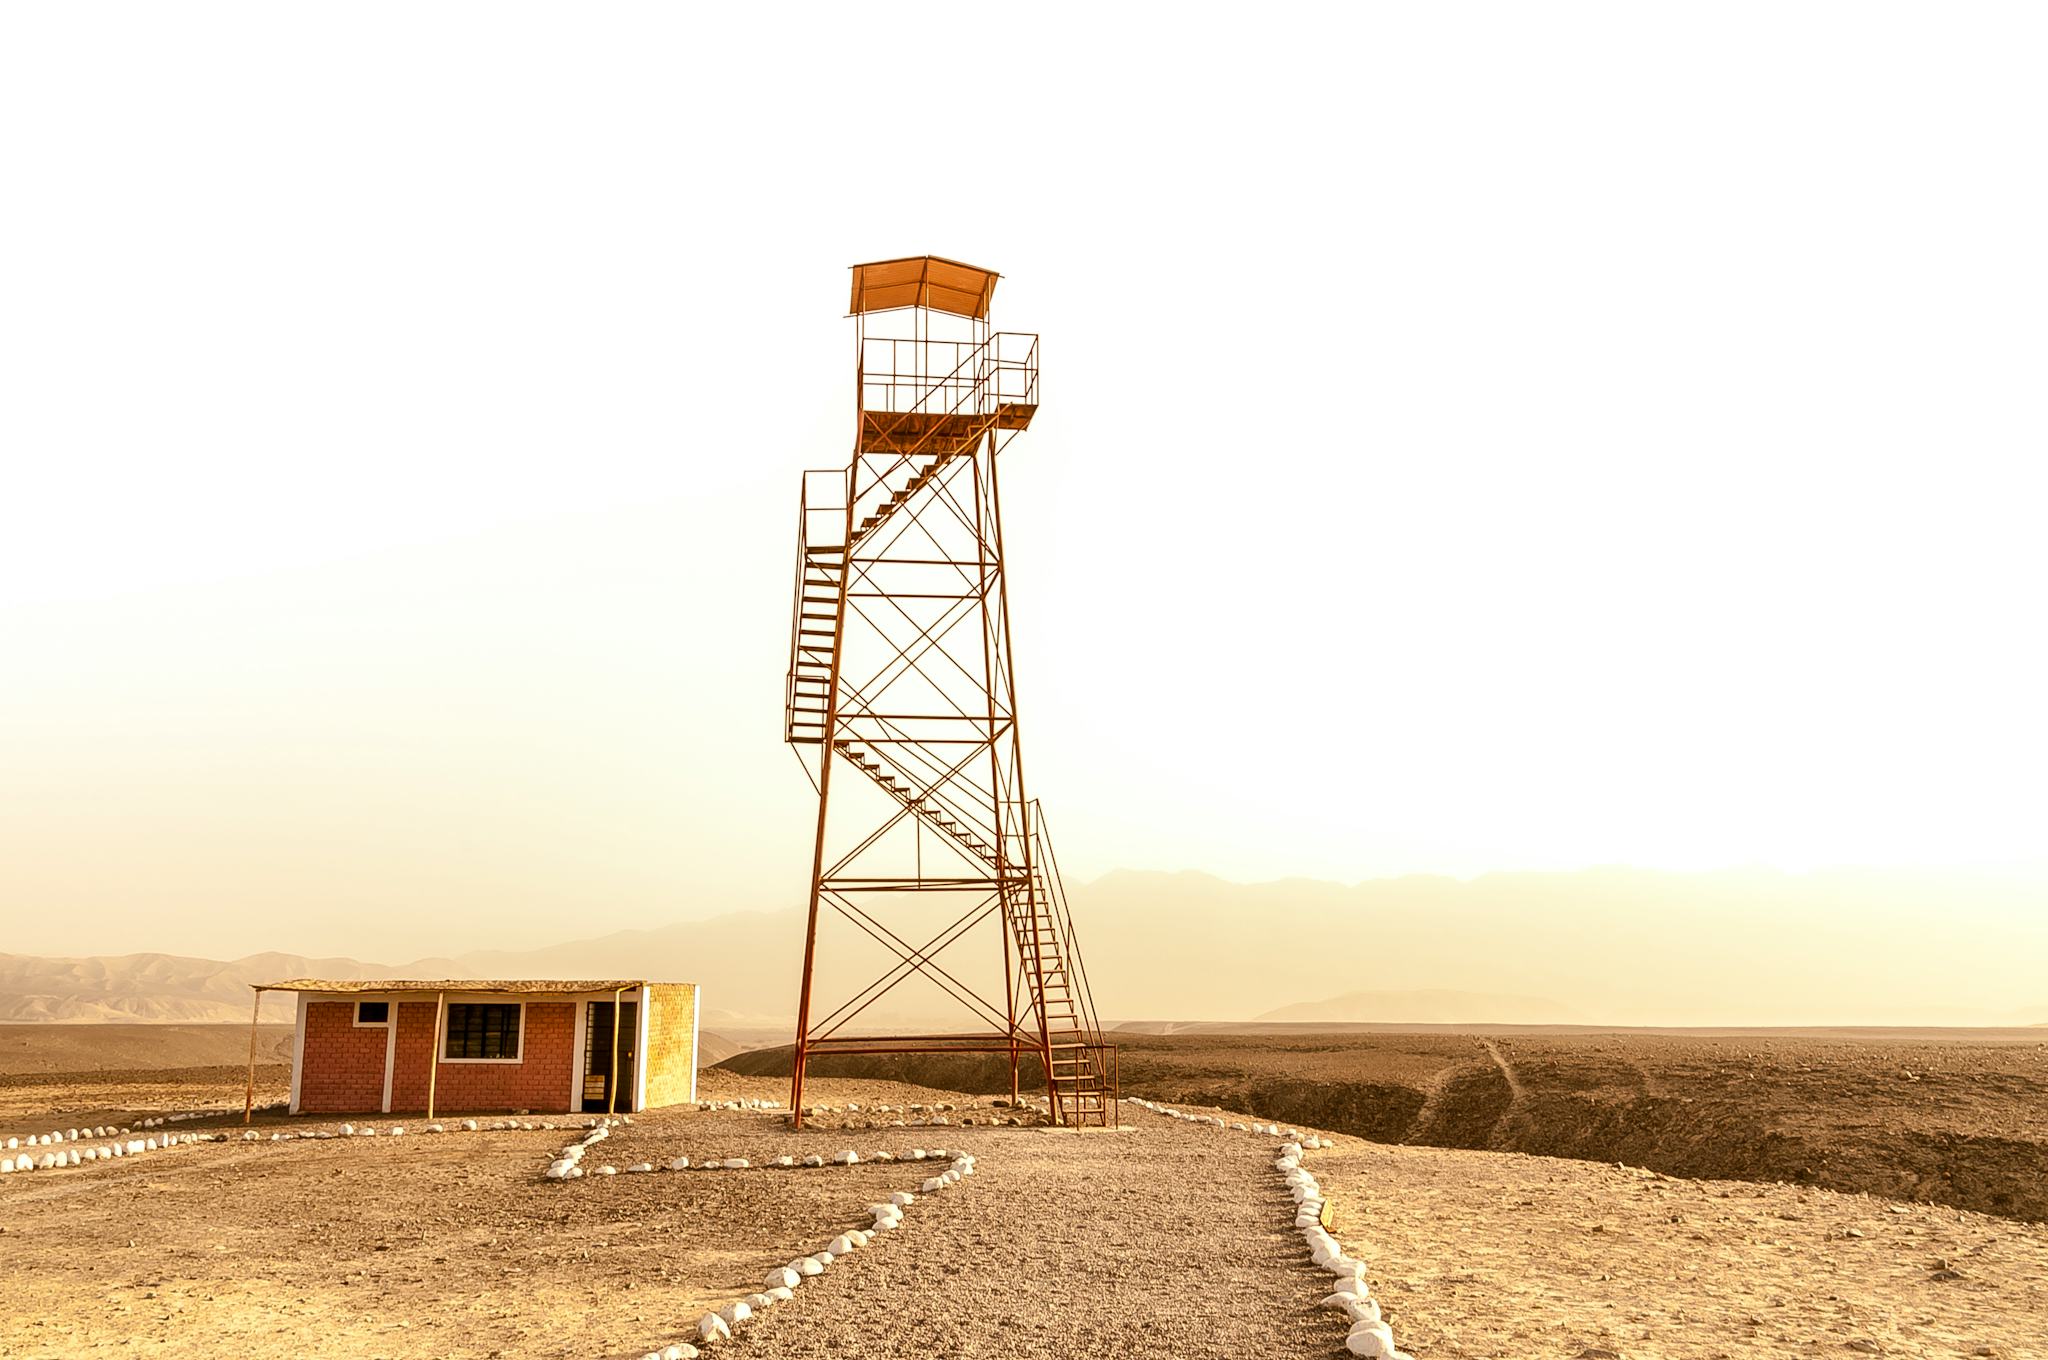 Nazca Lines Observation Tower